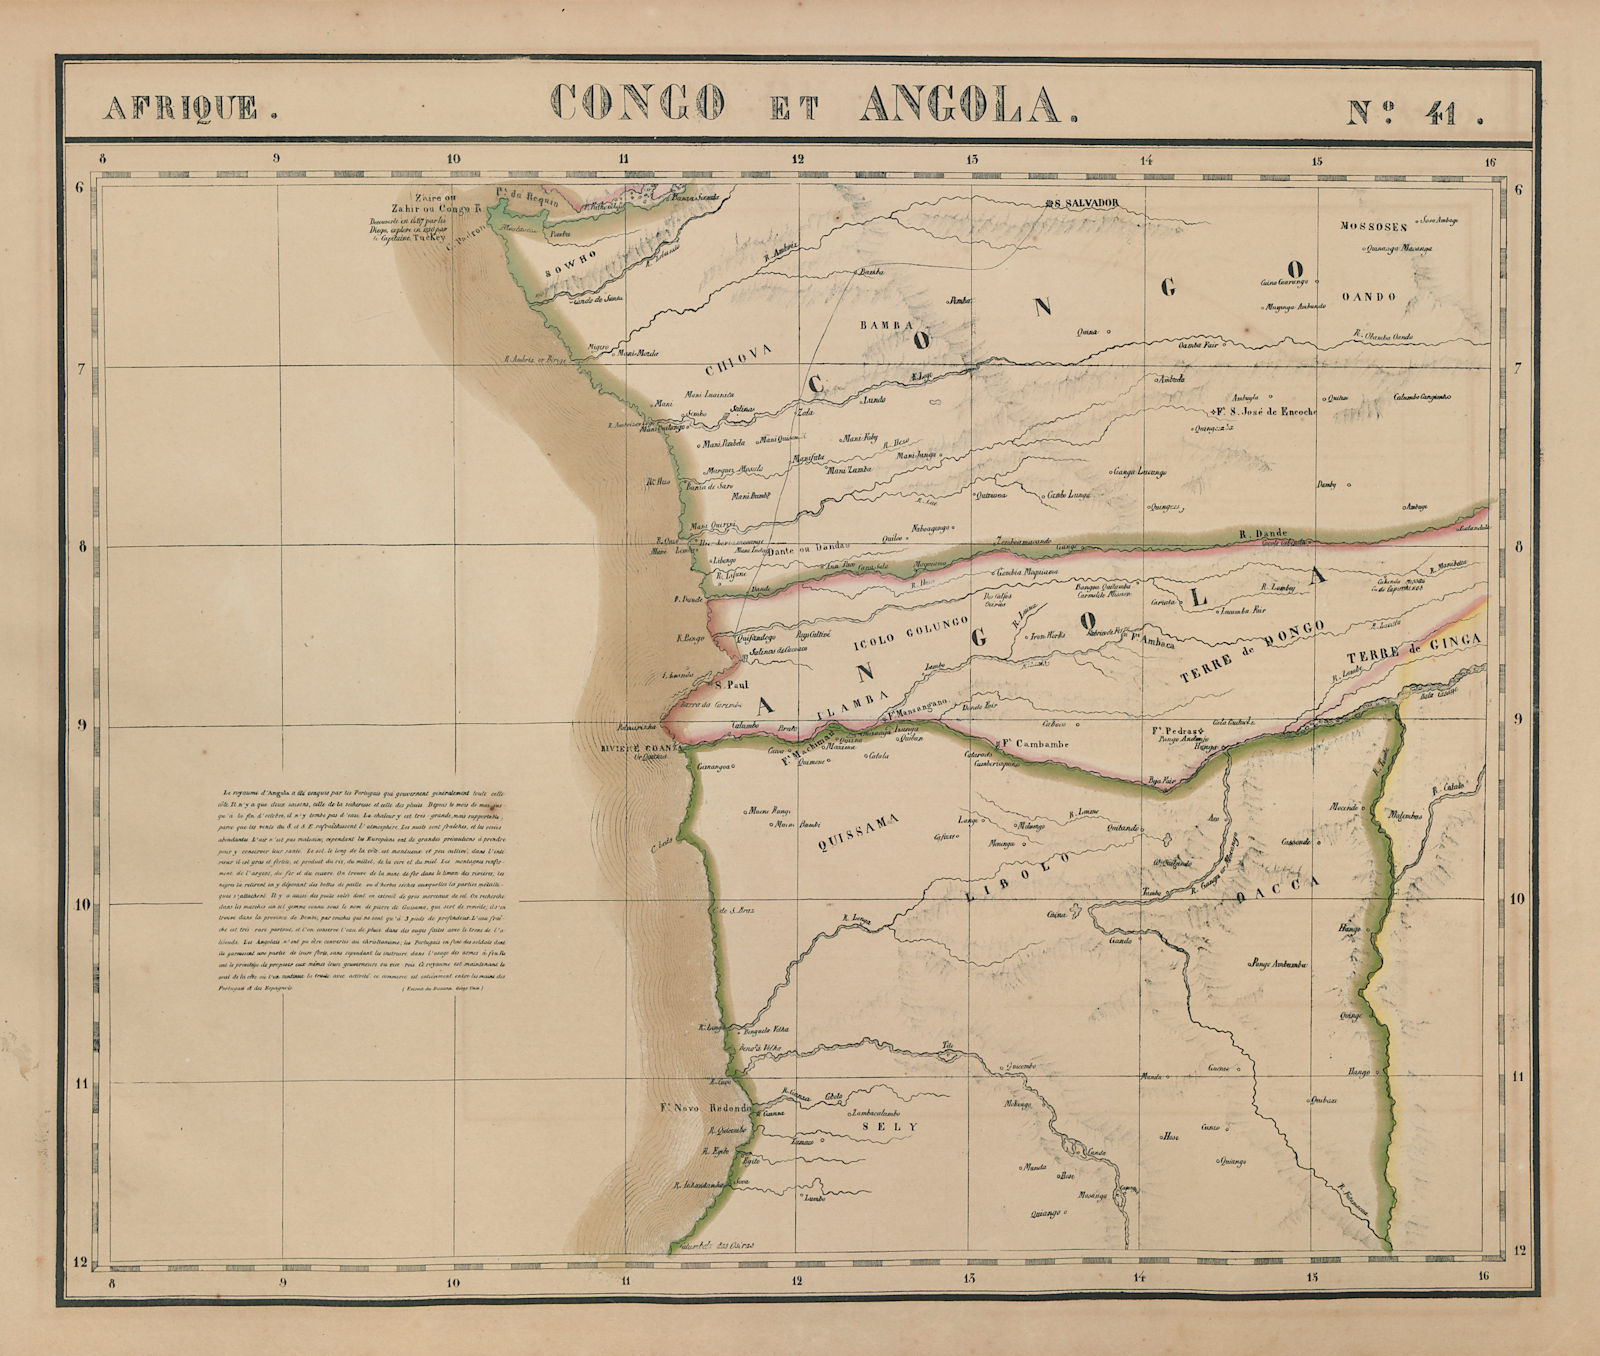 Associate Product Afrique. Congo et Angola #41. Northern Angola. VANDERMAELEN 1827 old map